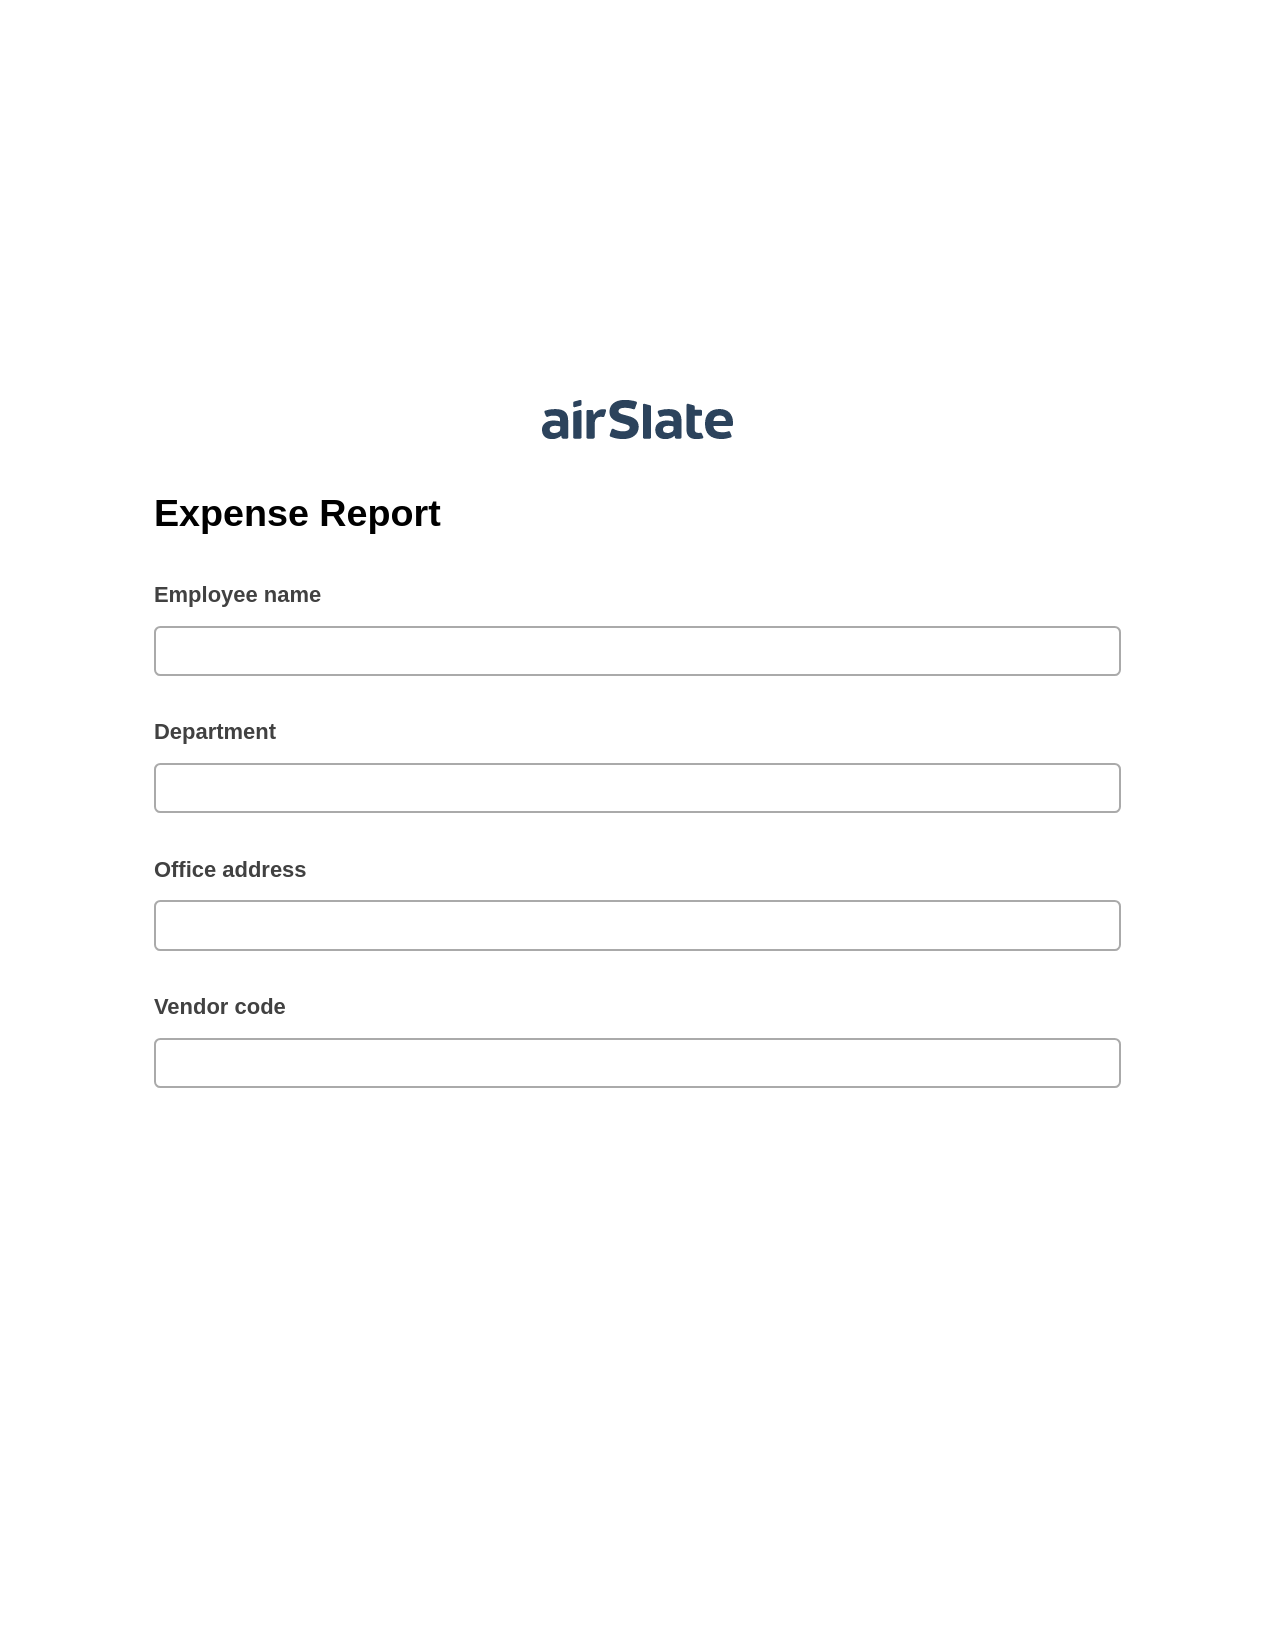 Multirole Expense Report Pre-fill from CSV File Bot, Webhook Bot, Slack Notification Postfinish Bot